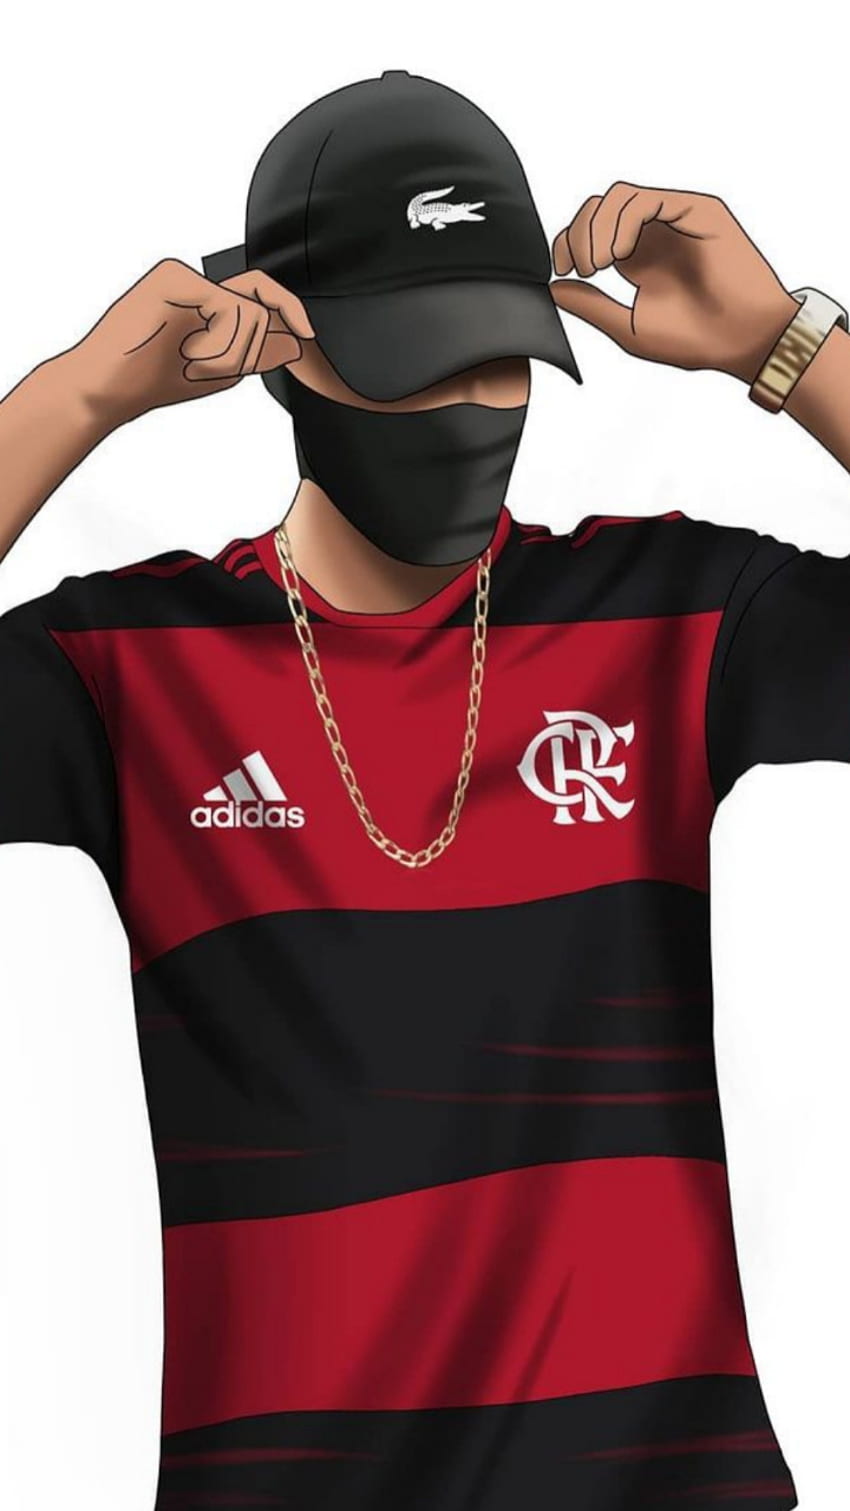 Cria do Flamengo, favela fondo de pantalla del teléfono